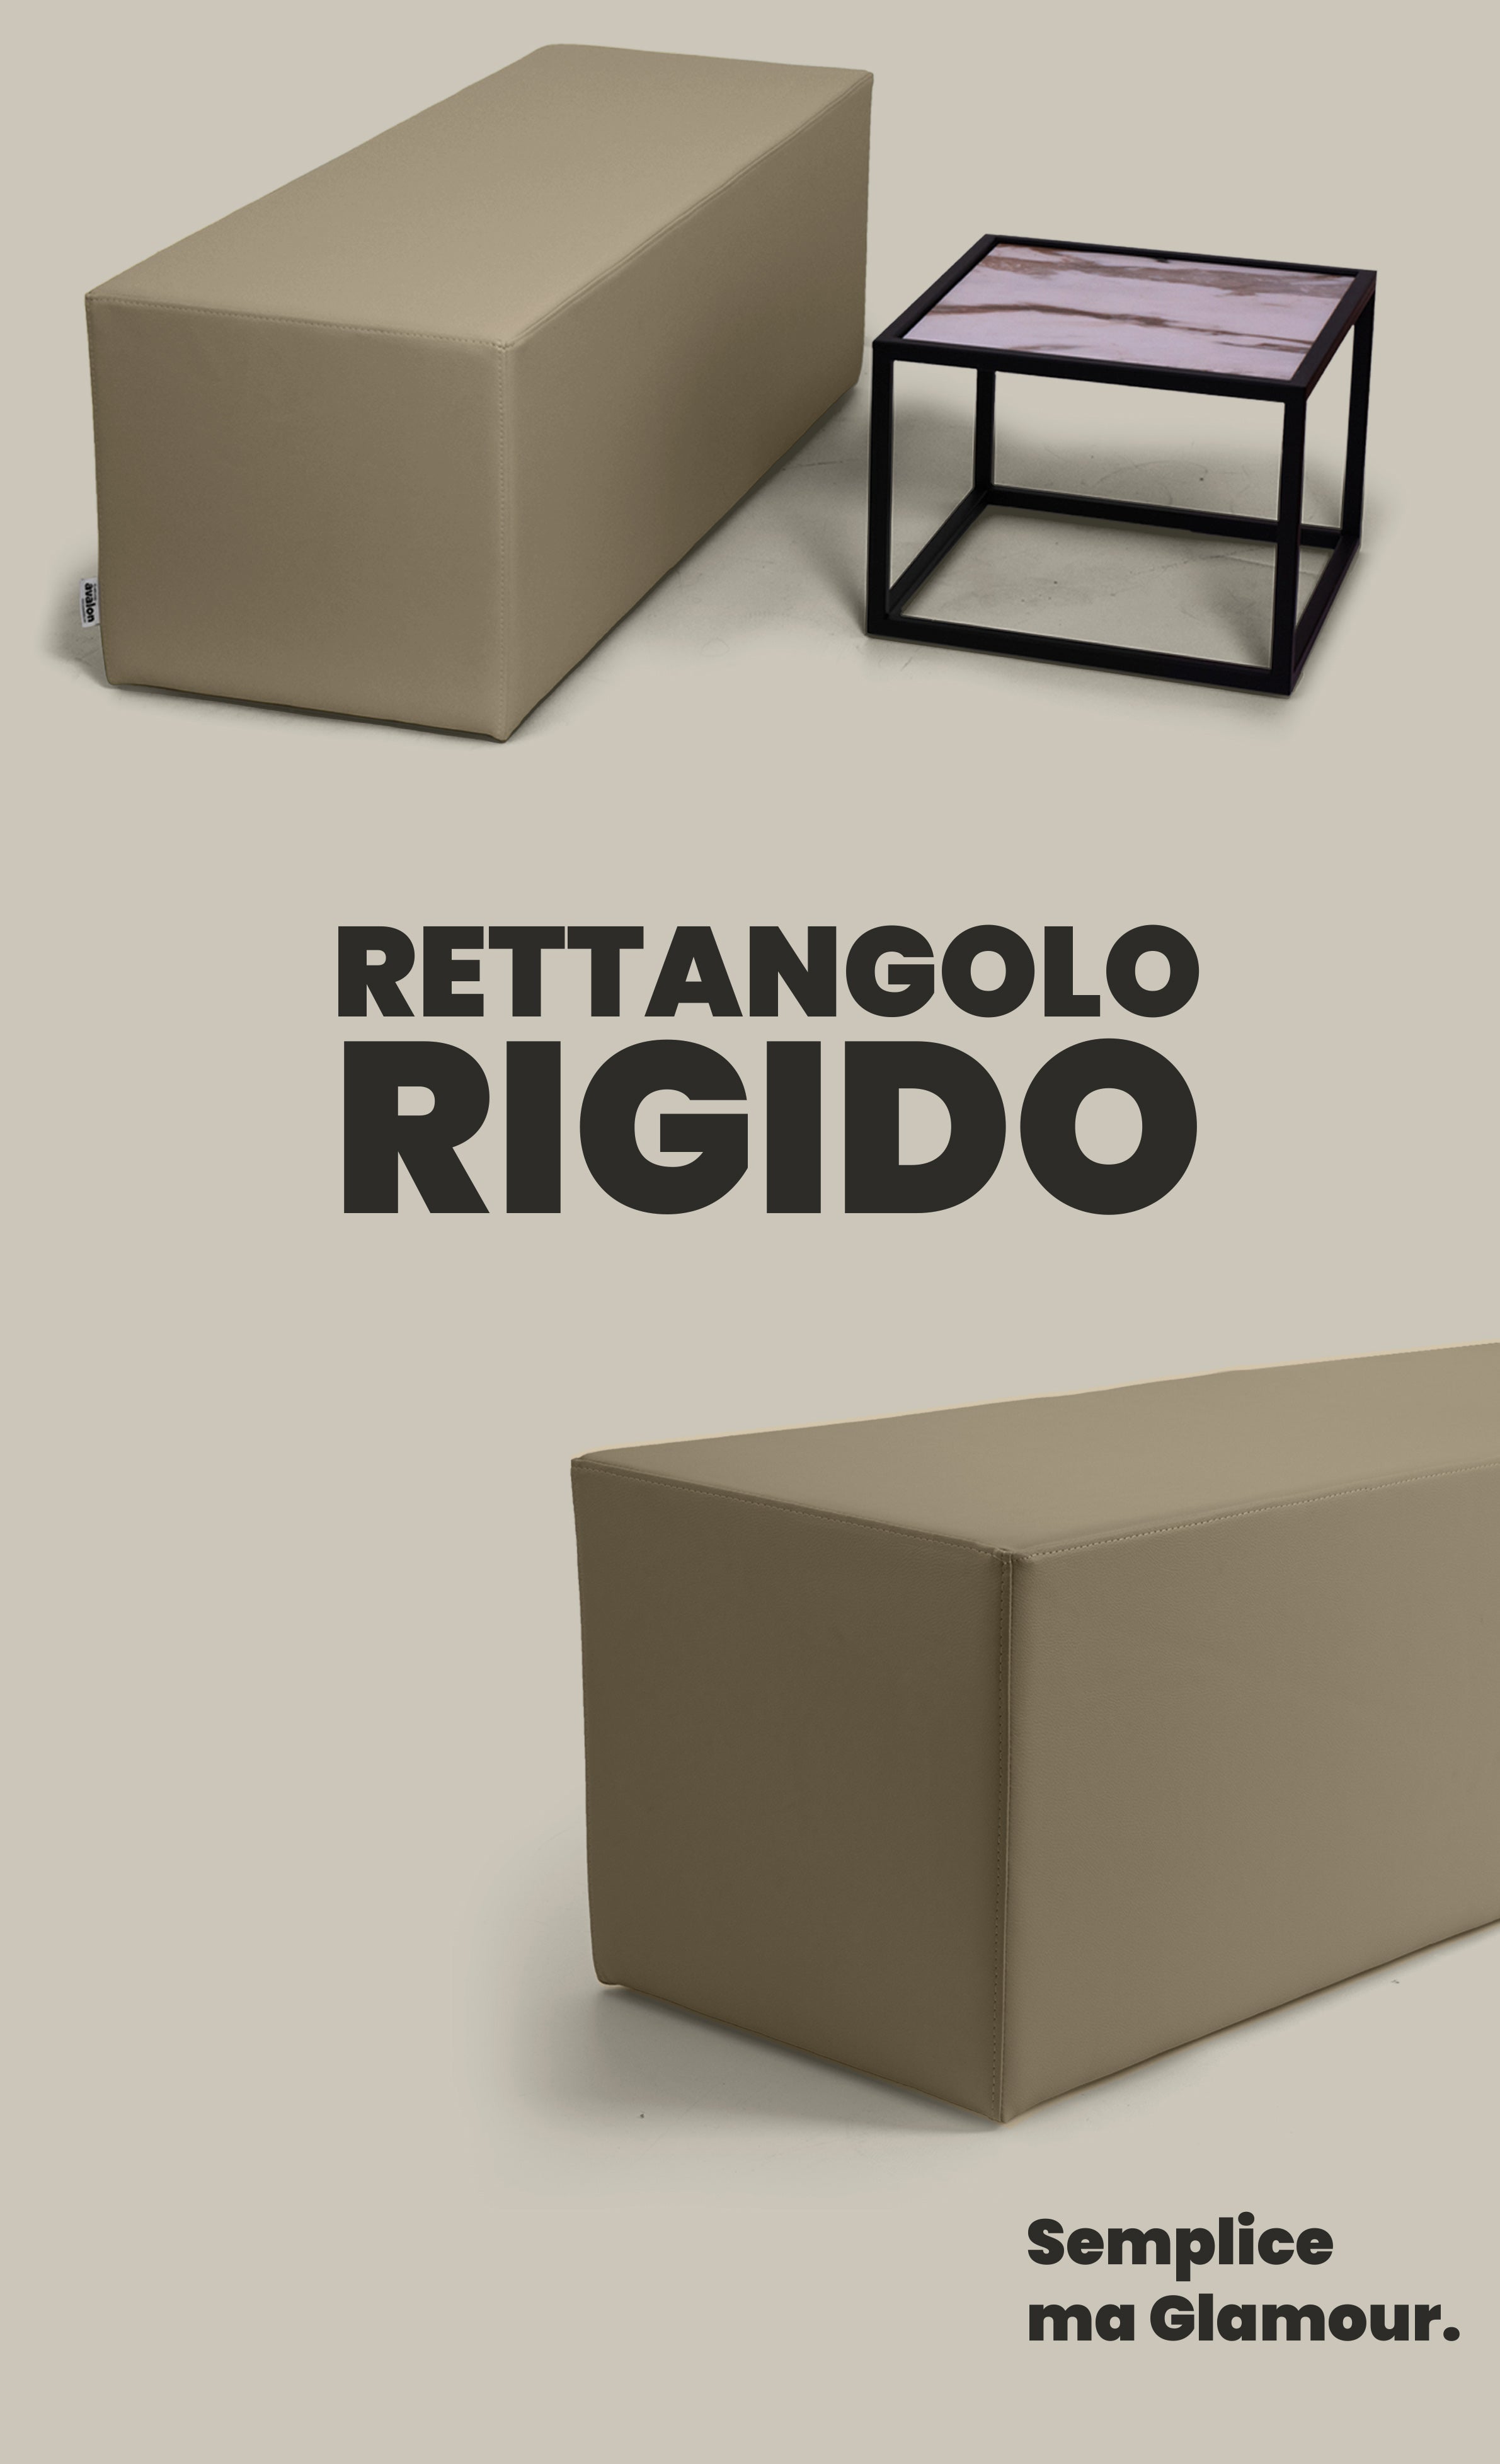 rigid rectangular ottoman